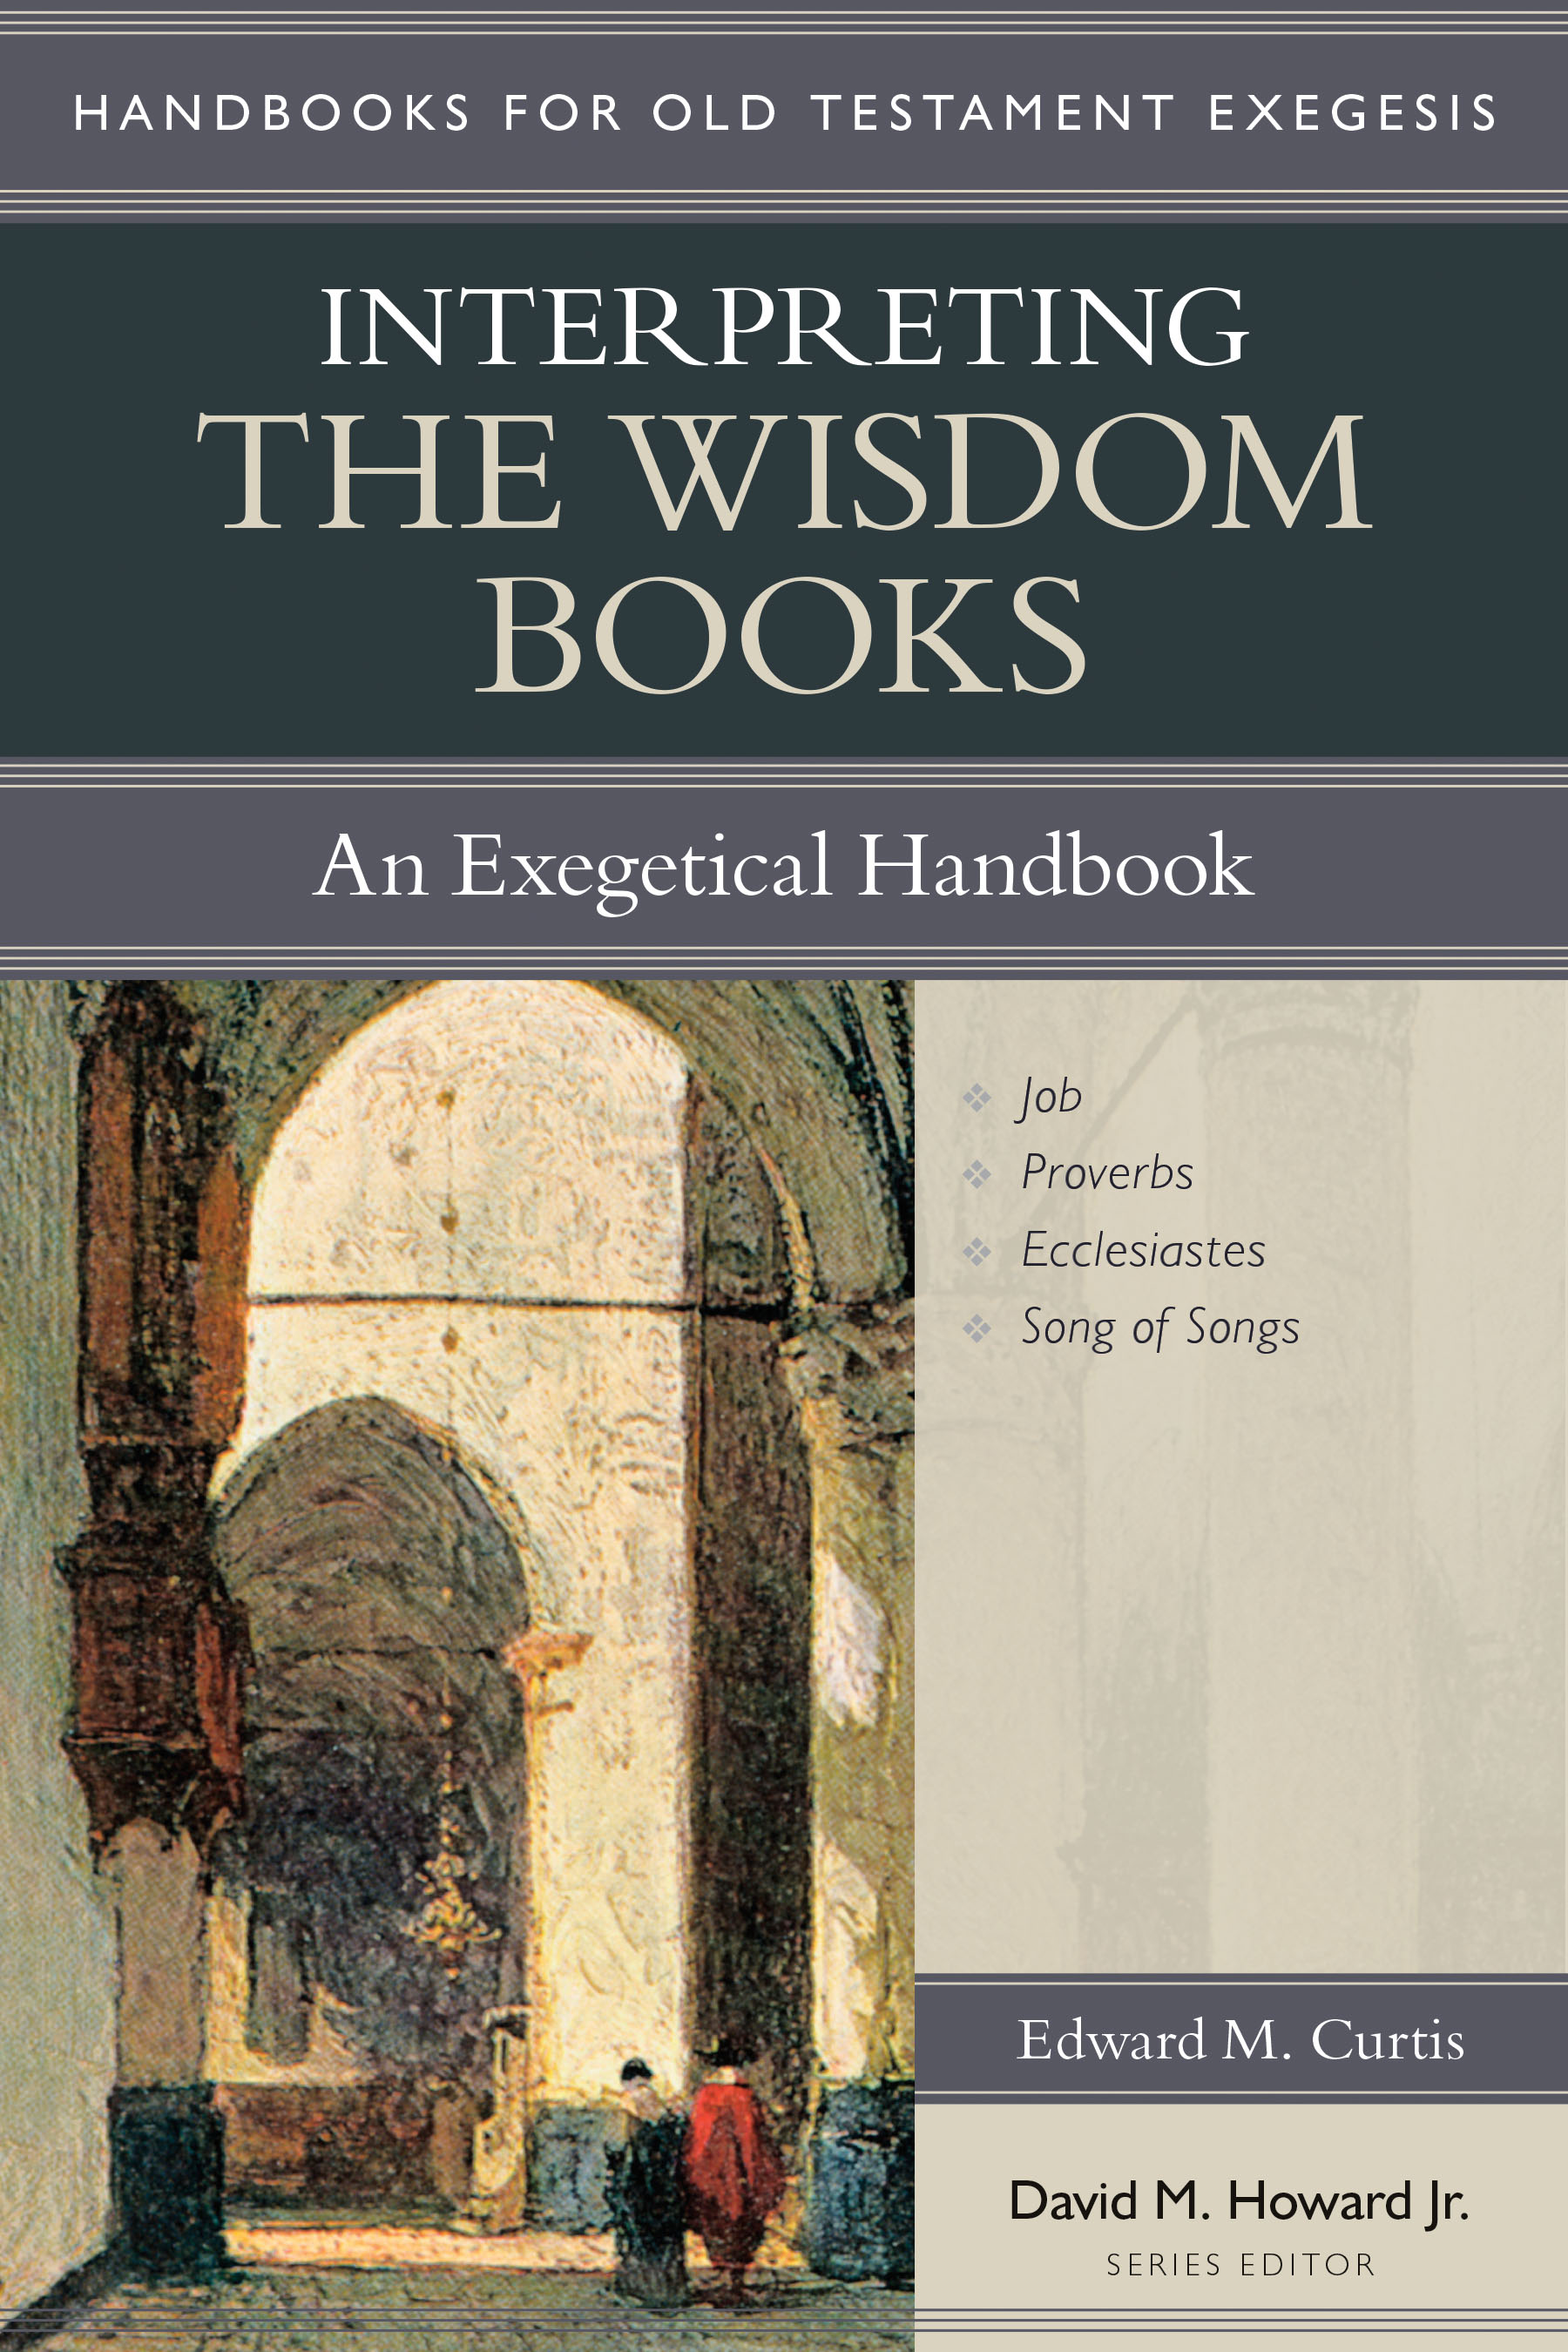 what are the wisdom books